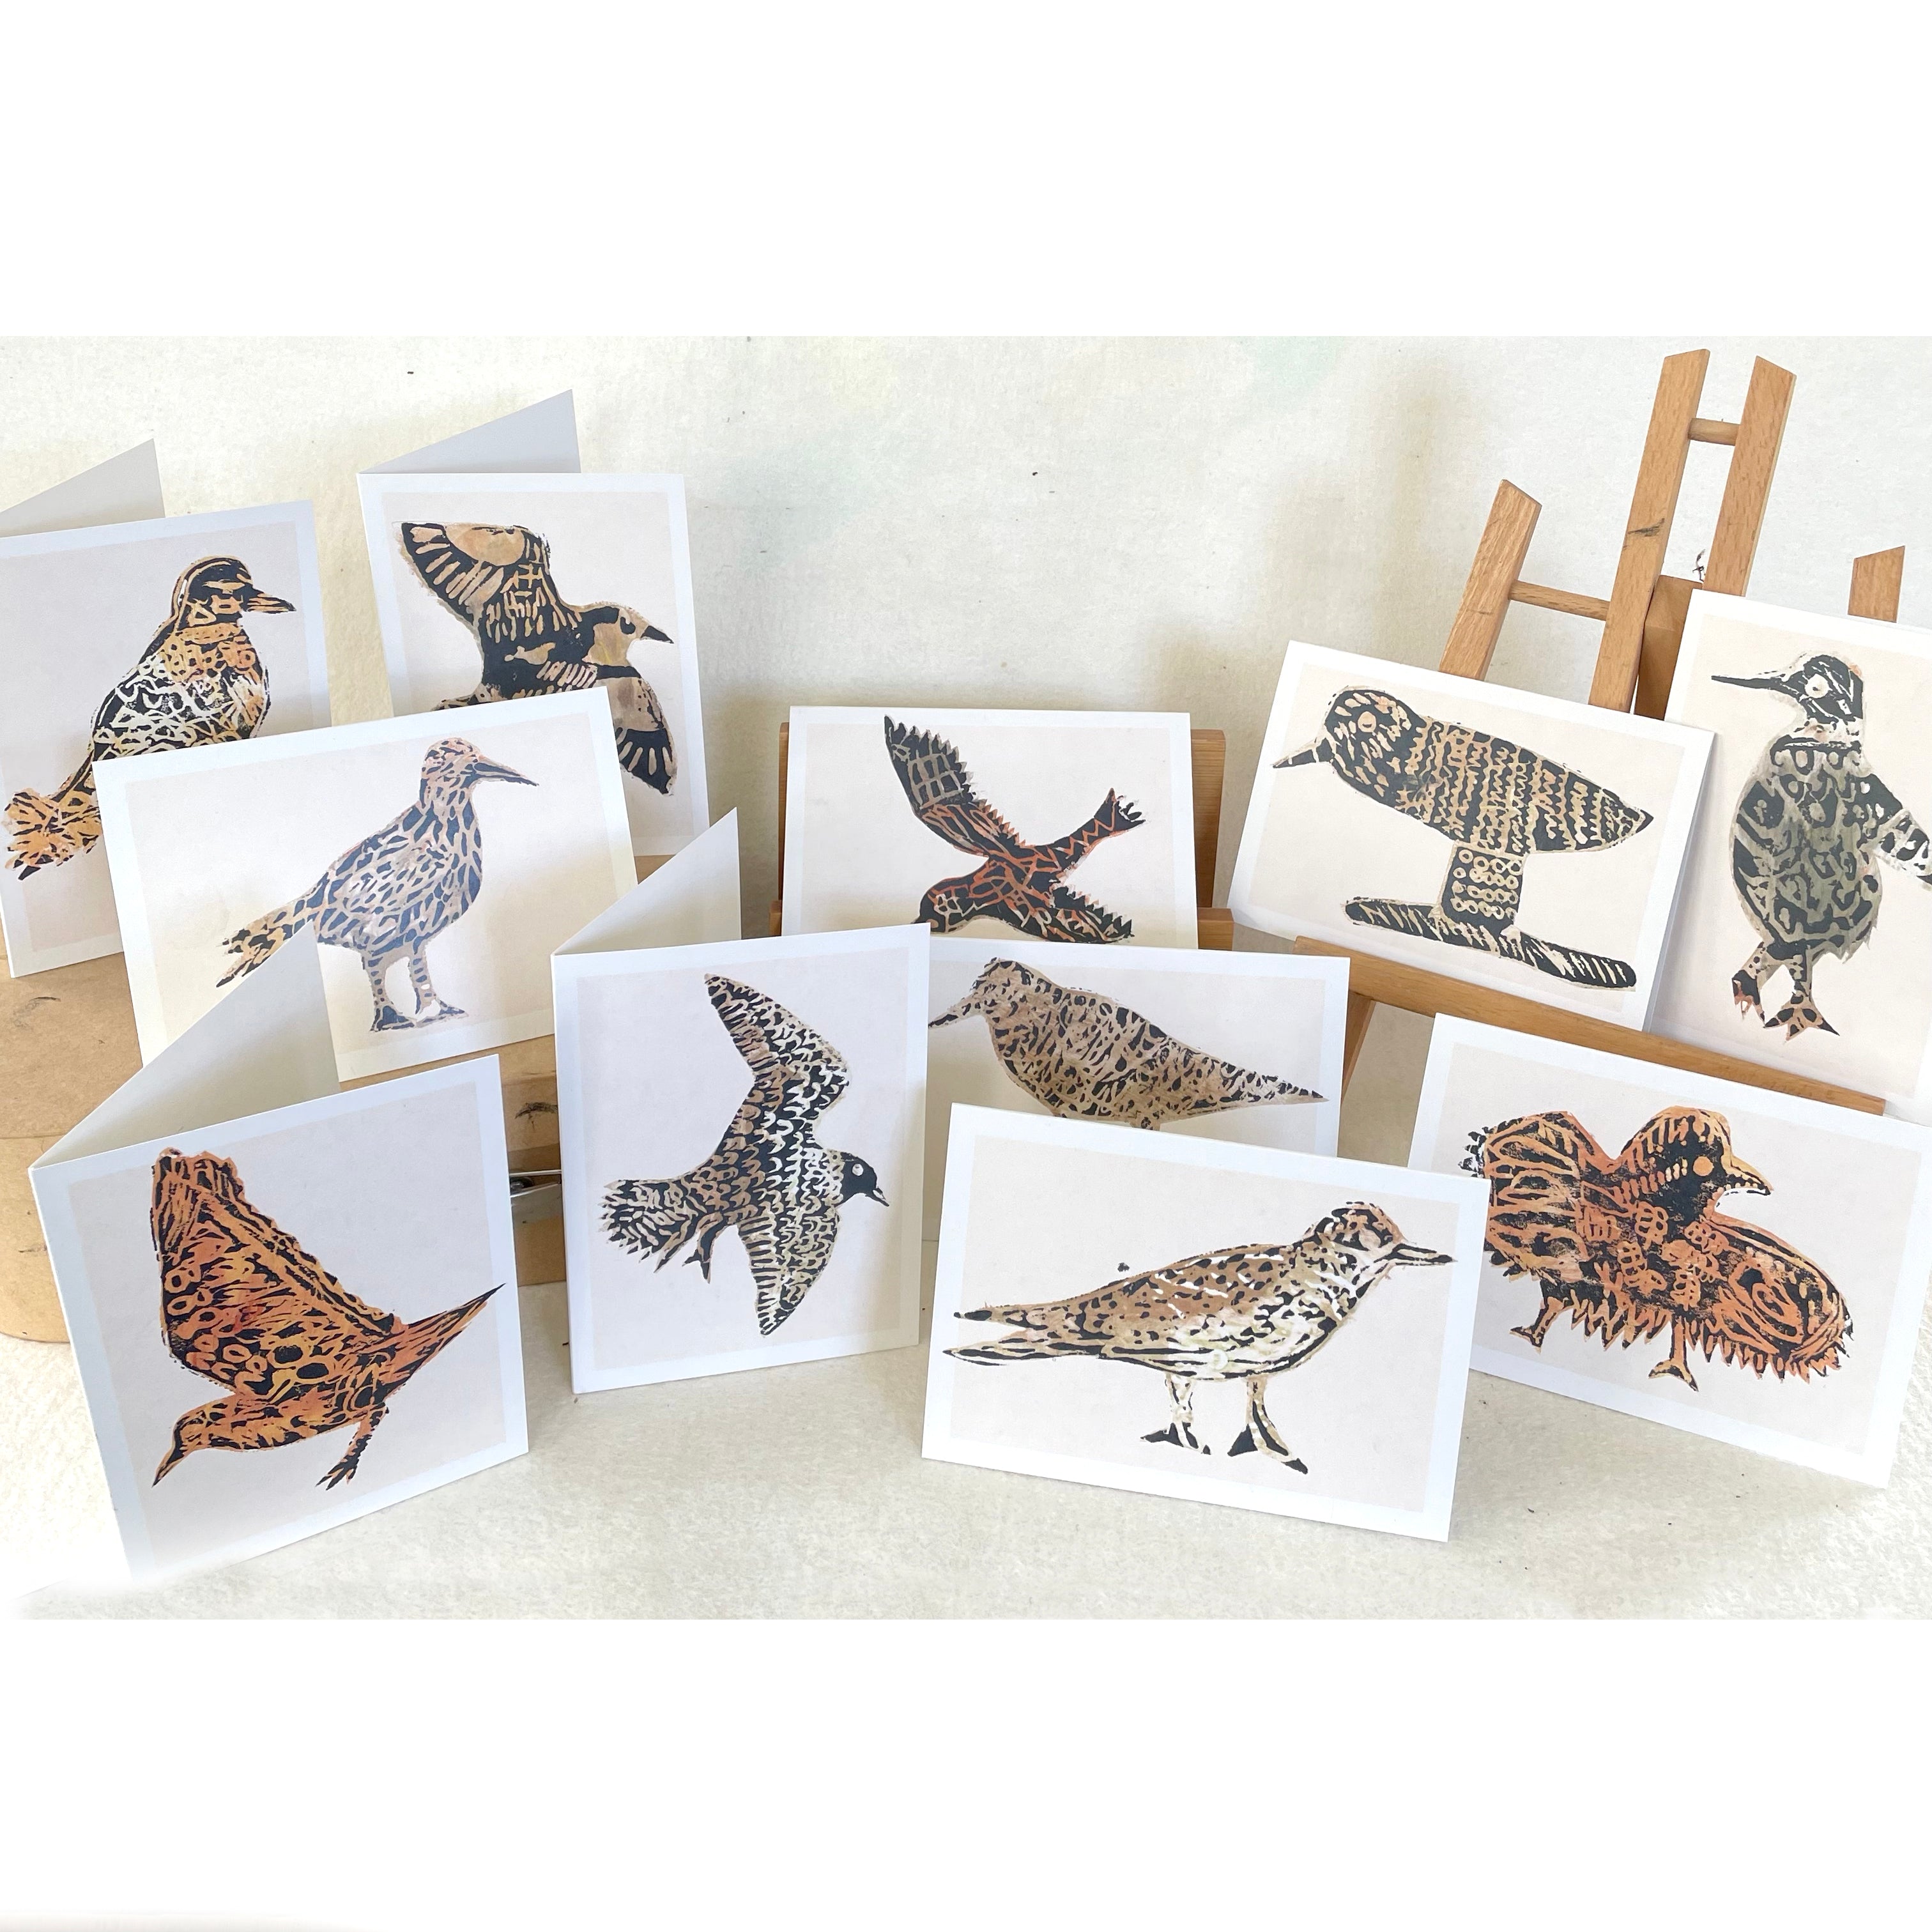 Migratory Birds Greeting Card Set - Fundraiser